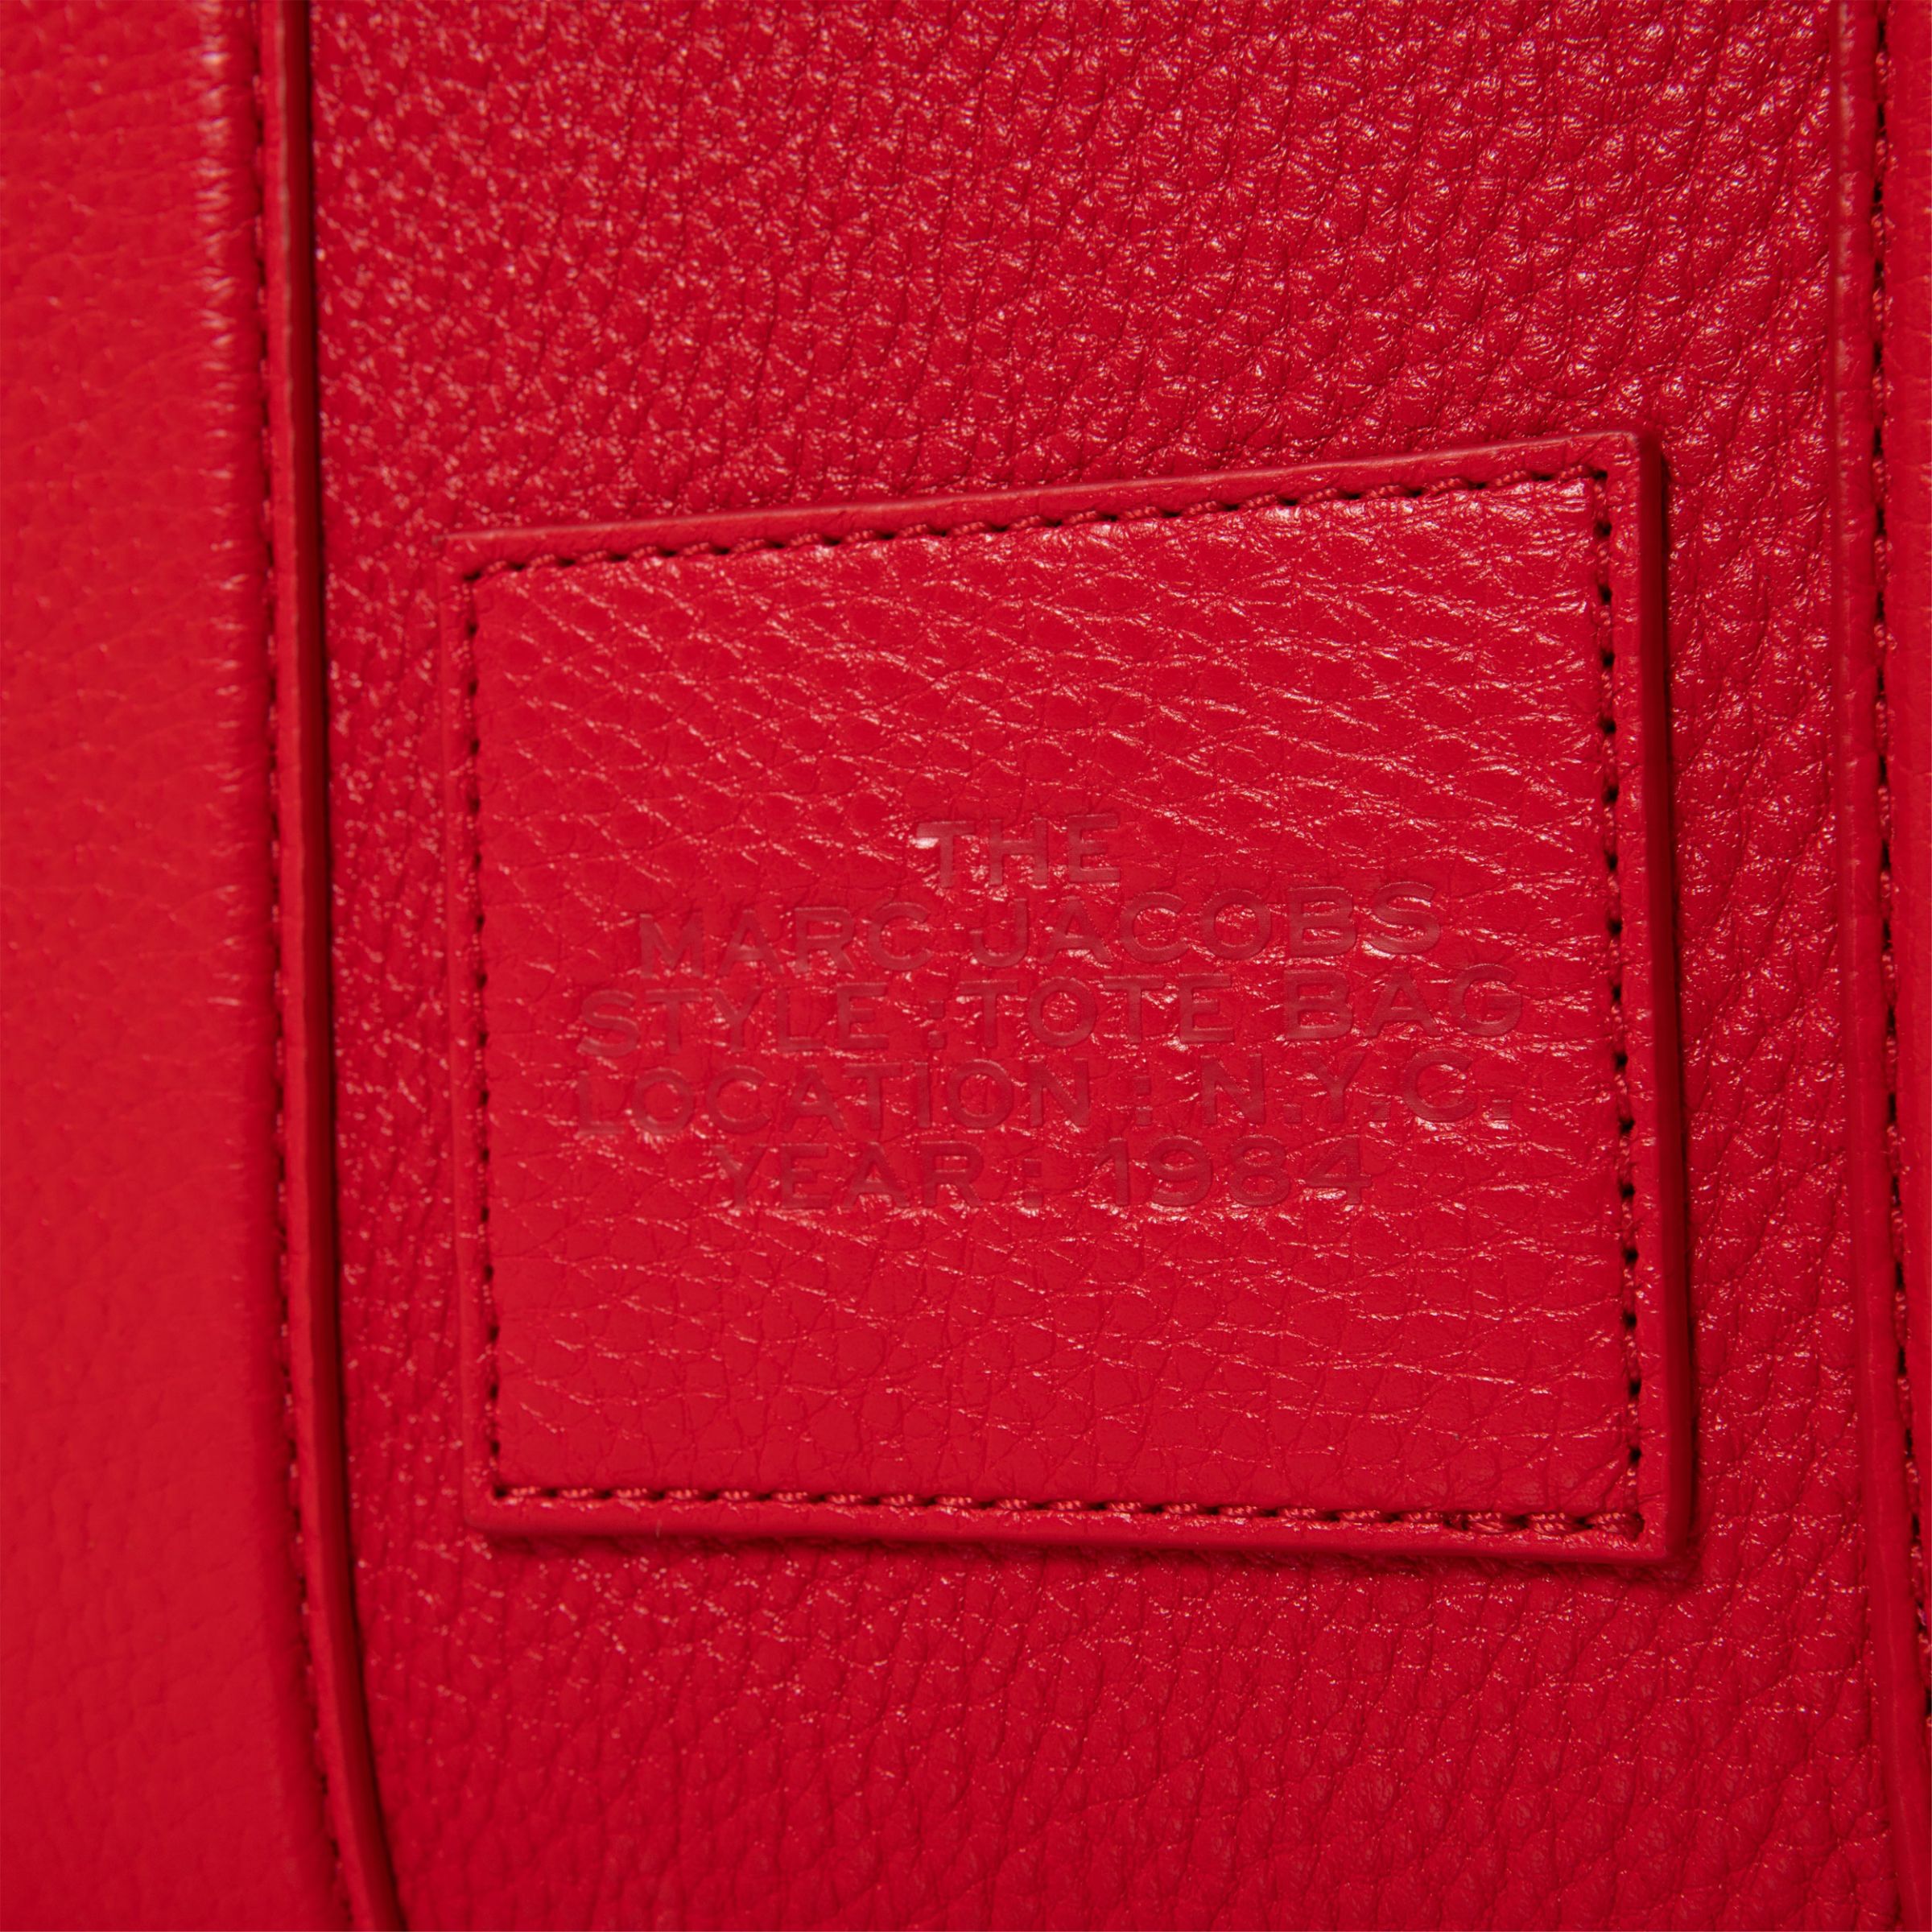 Сумка Marc Jacobs Mini Tote Bag красная